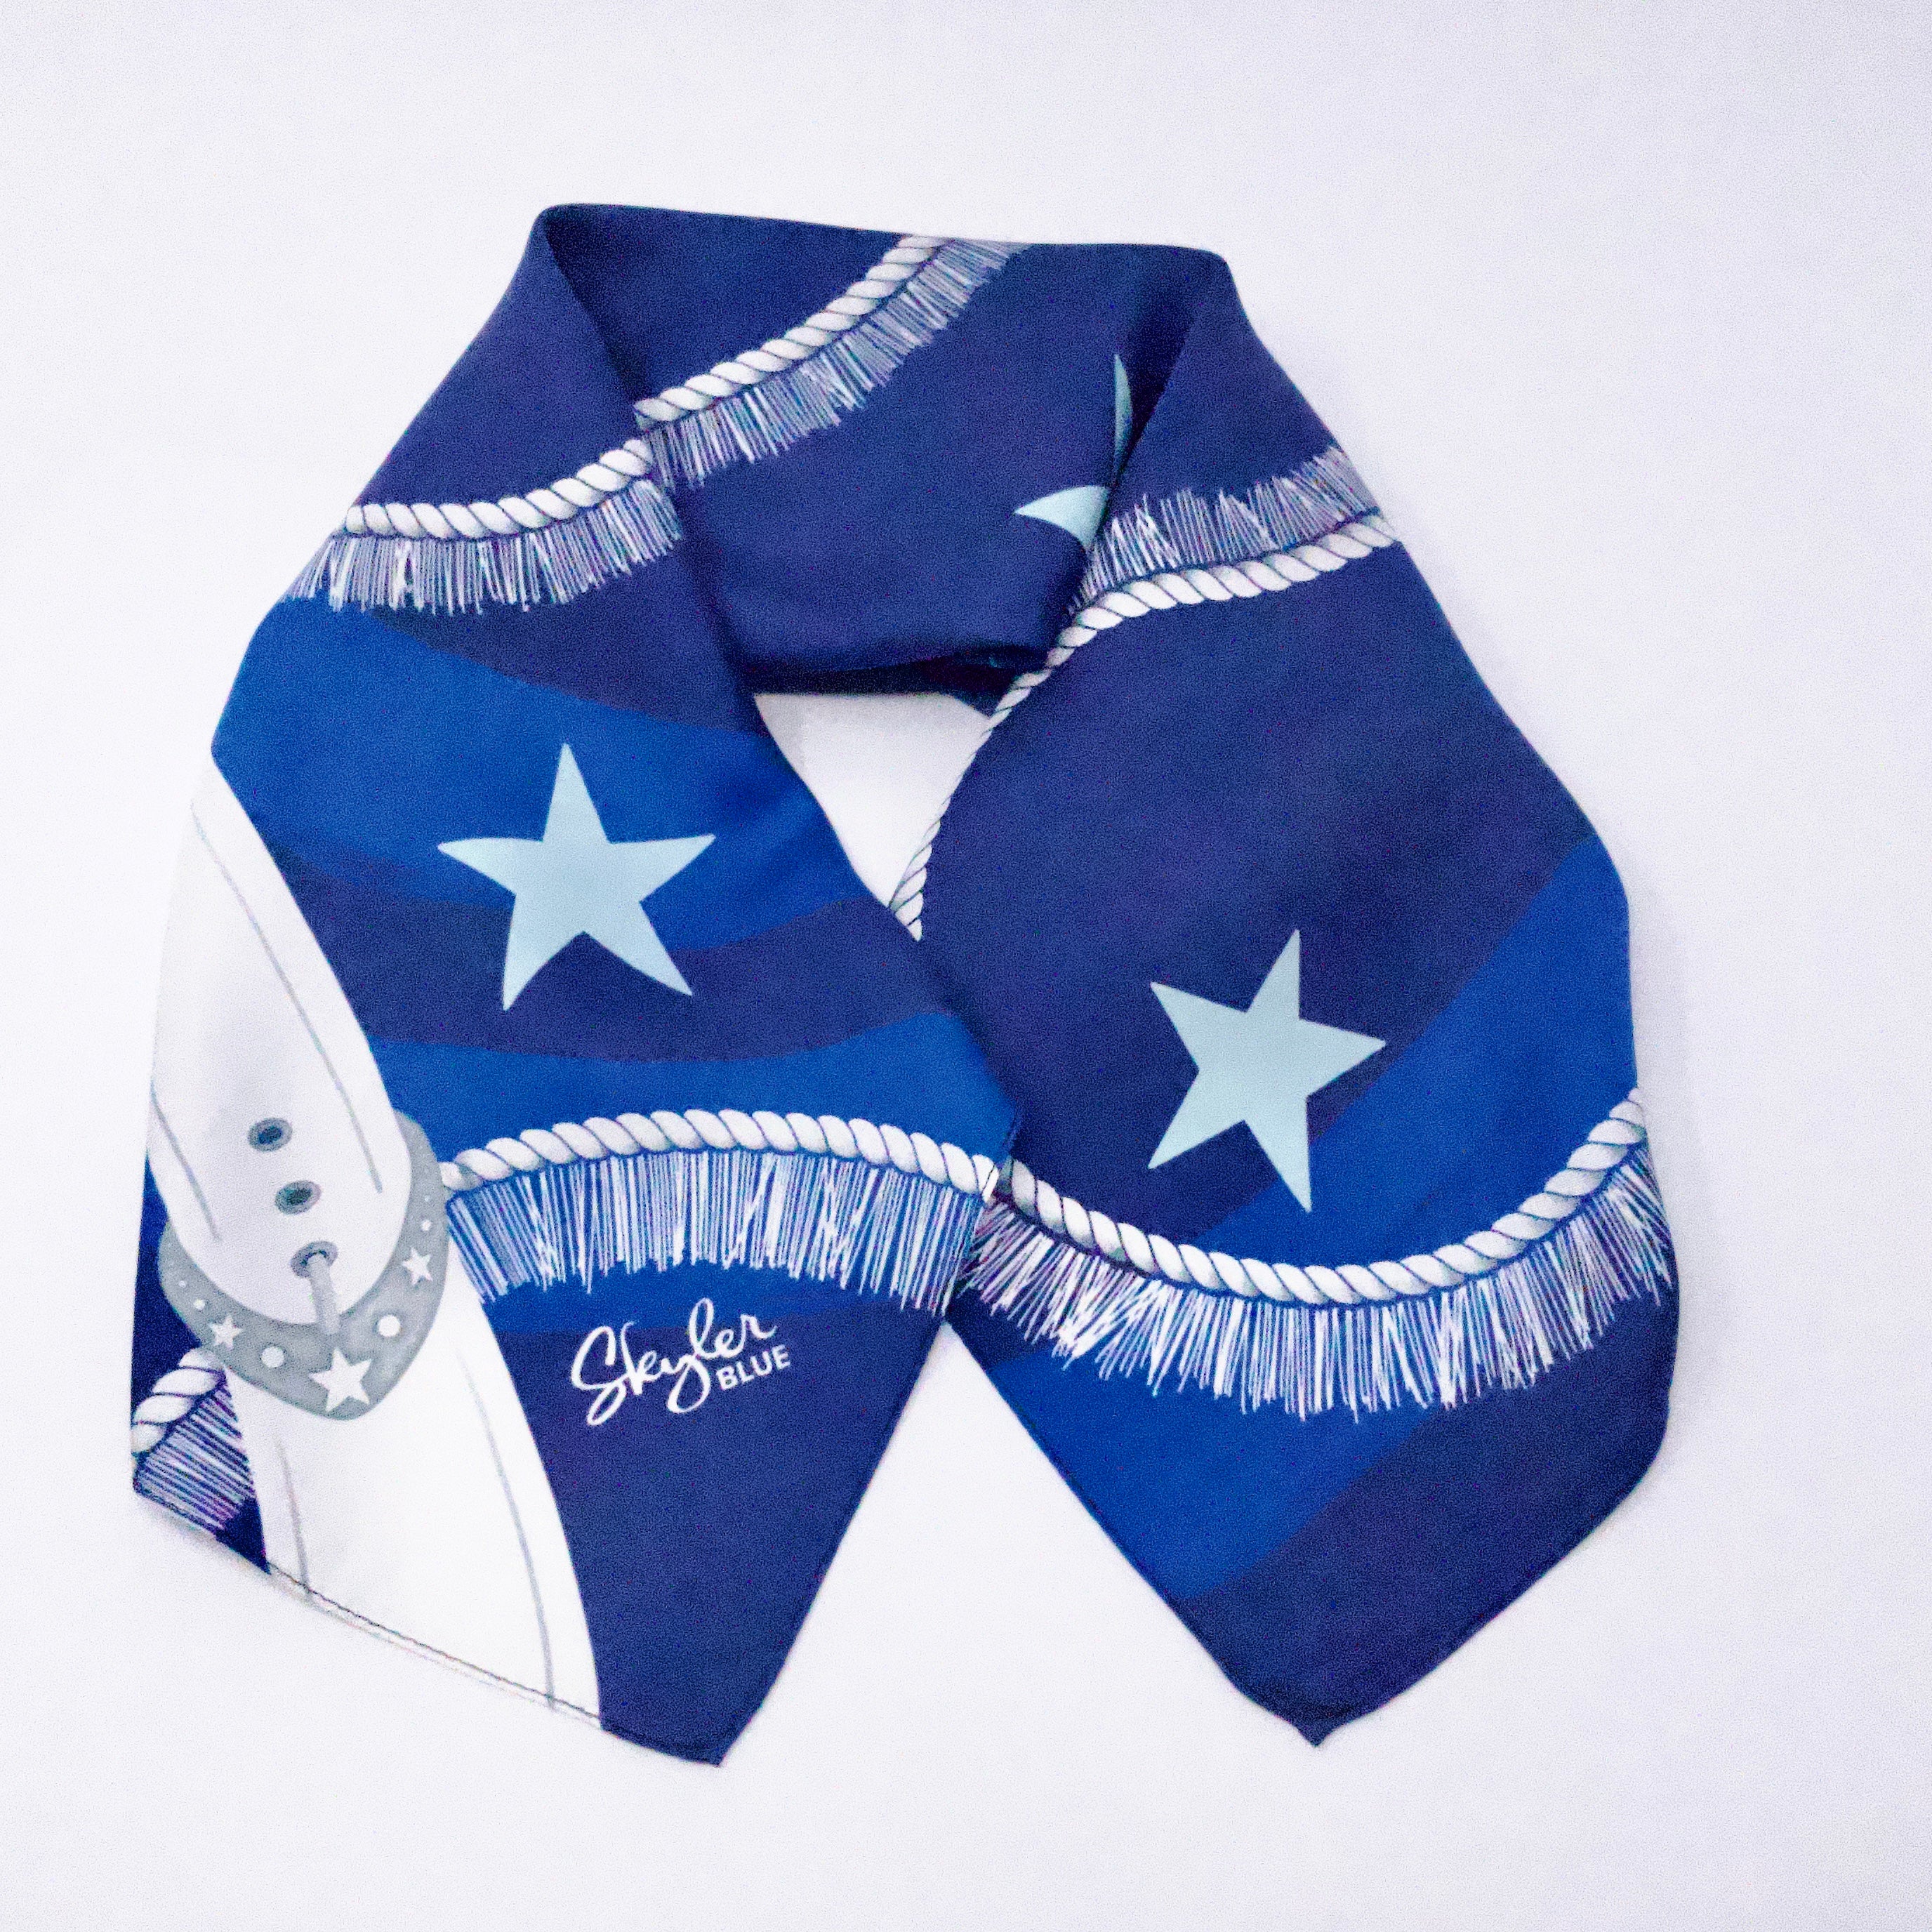 Skyler Blue’s The Dallas 002 60-centimeter 100% silk twill scarf